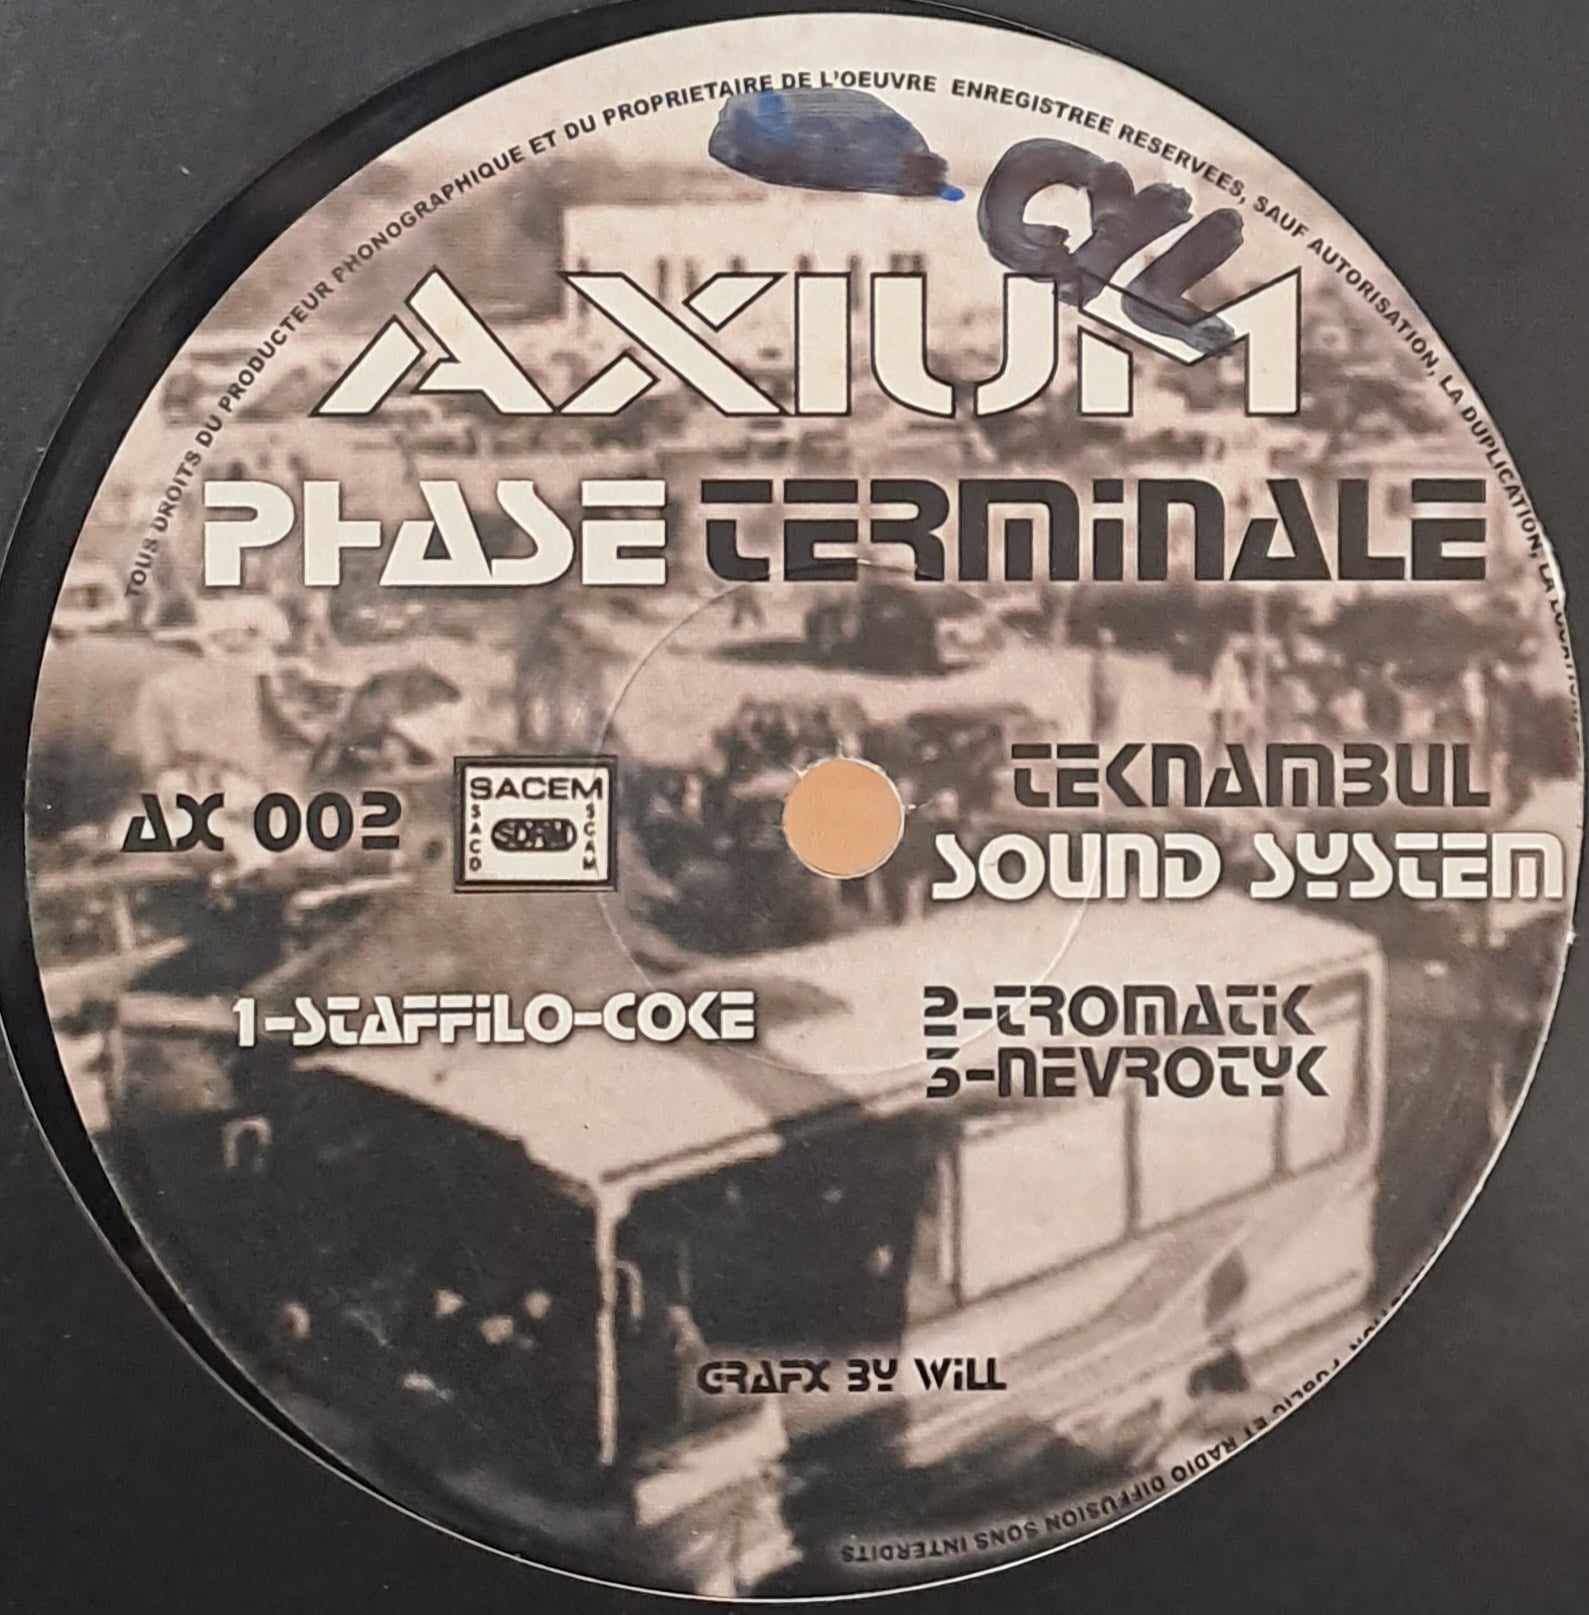 Axium 002 - vinyle freetekno